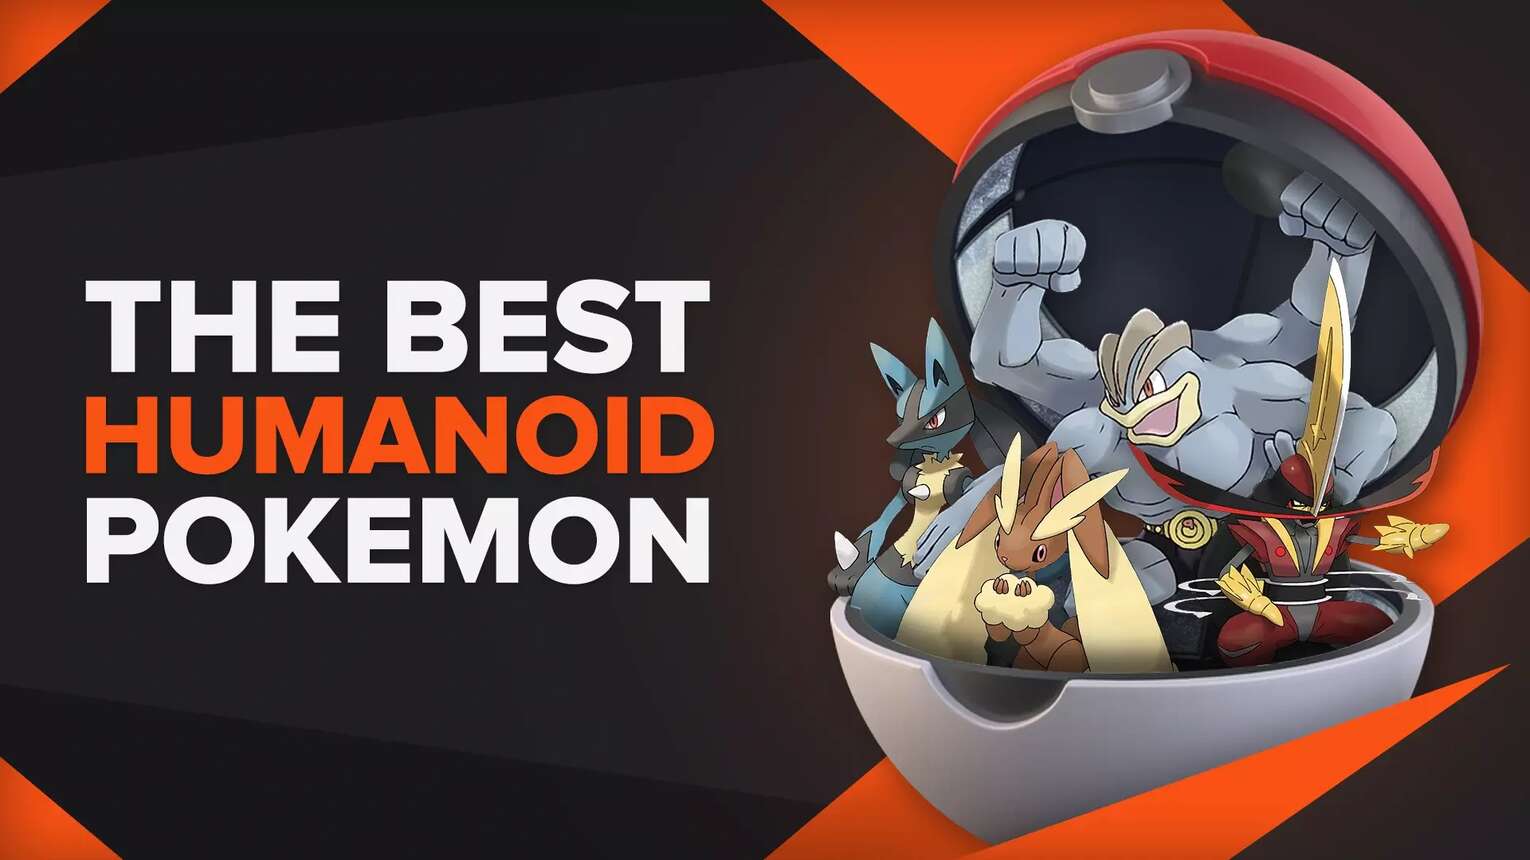 Best 10 Humanoid Pokemon in the Human-Like Egg Group